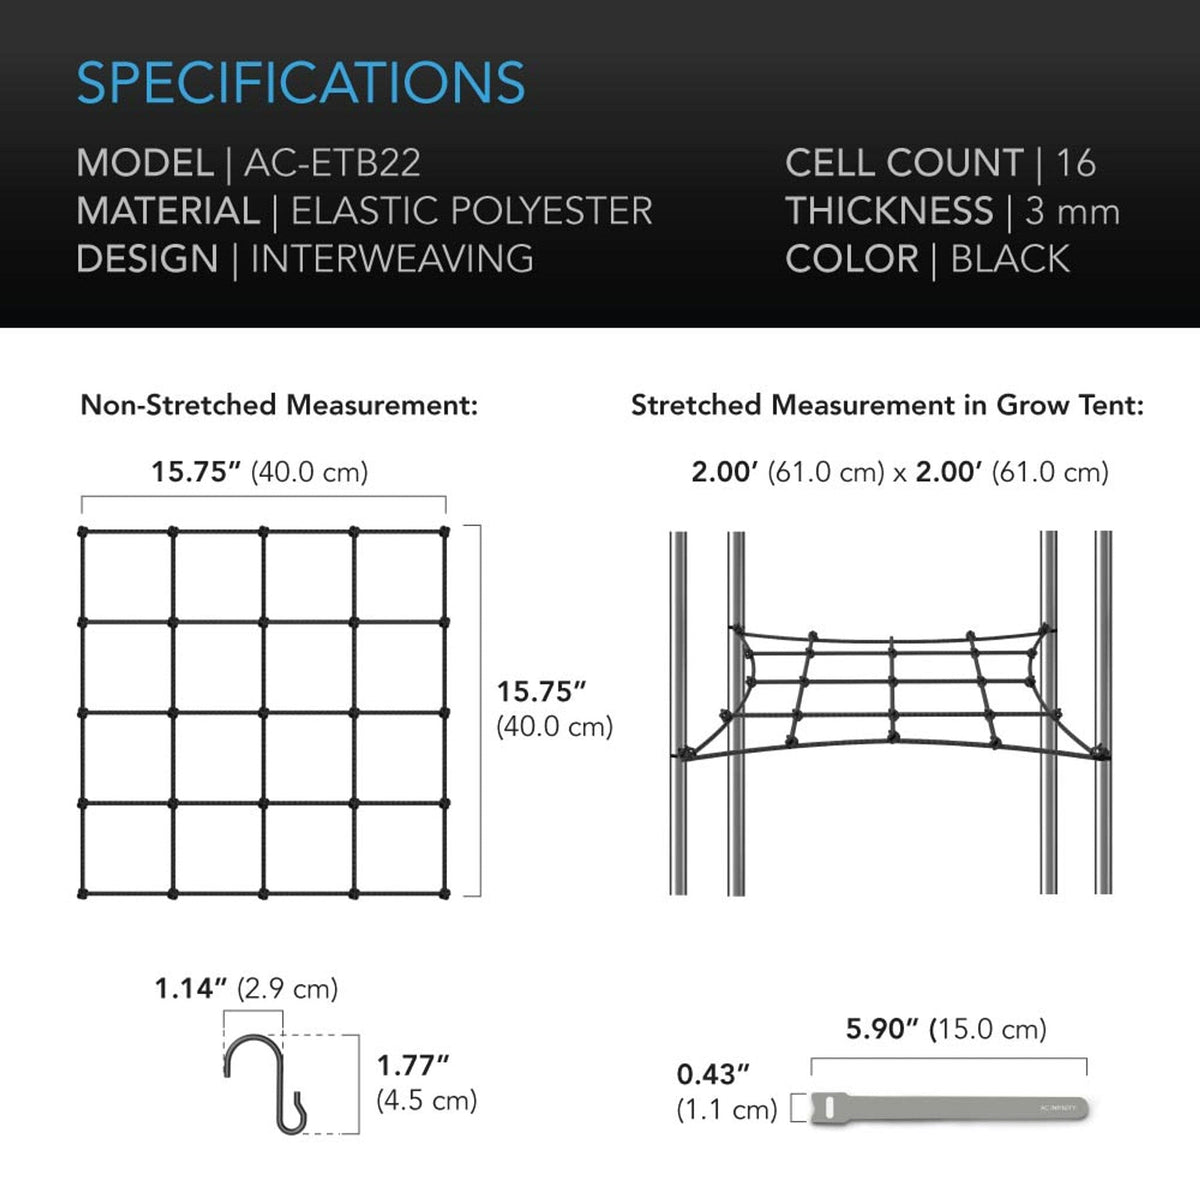 Trellis netting 2x2 specifications